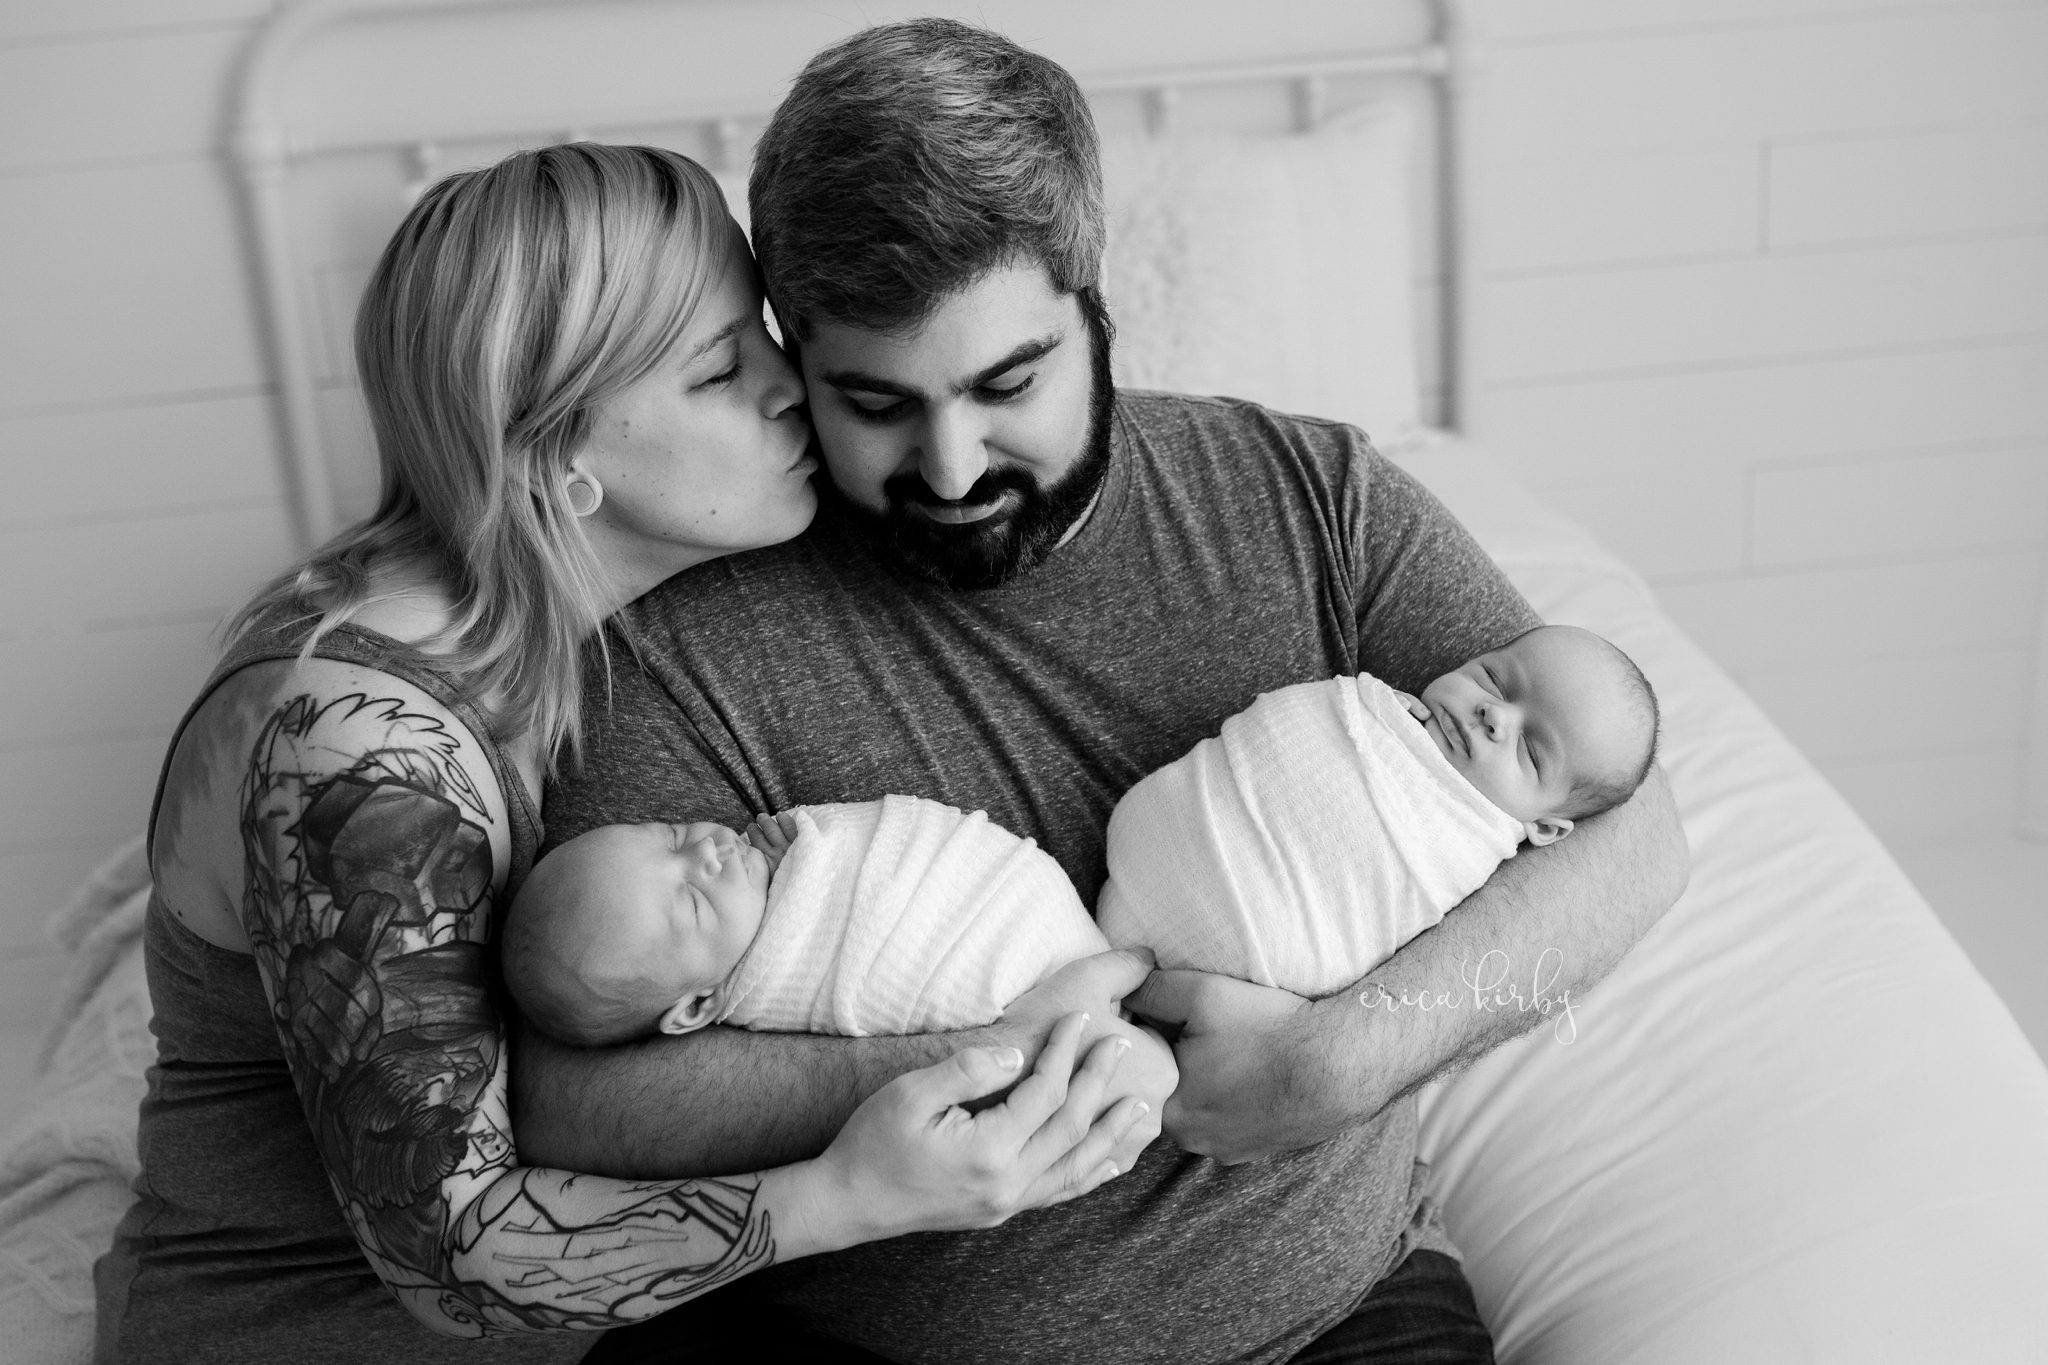 nwa newborn twins portrait session - erica kirby photography - bentonville rogers fayetteville arkansas baby photographer